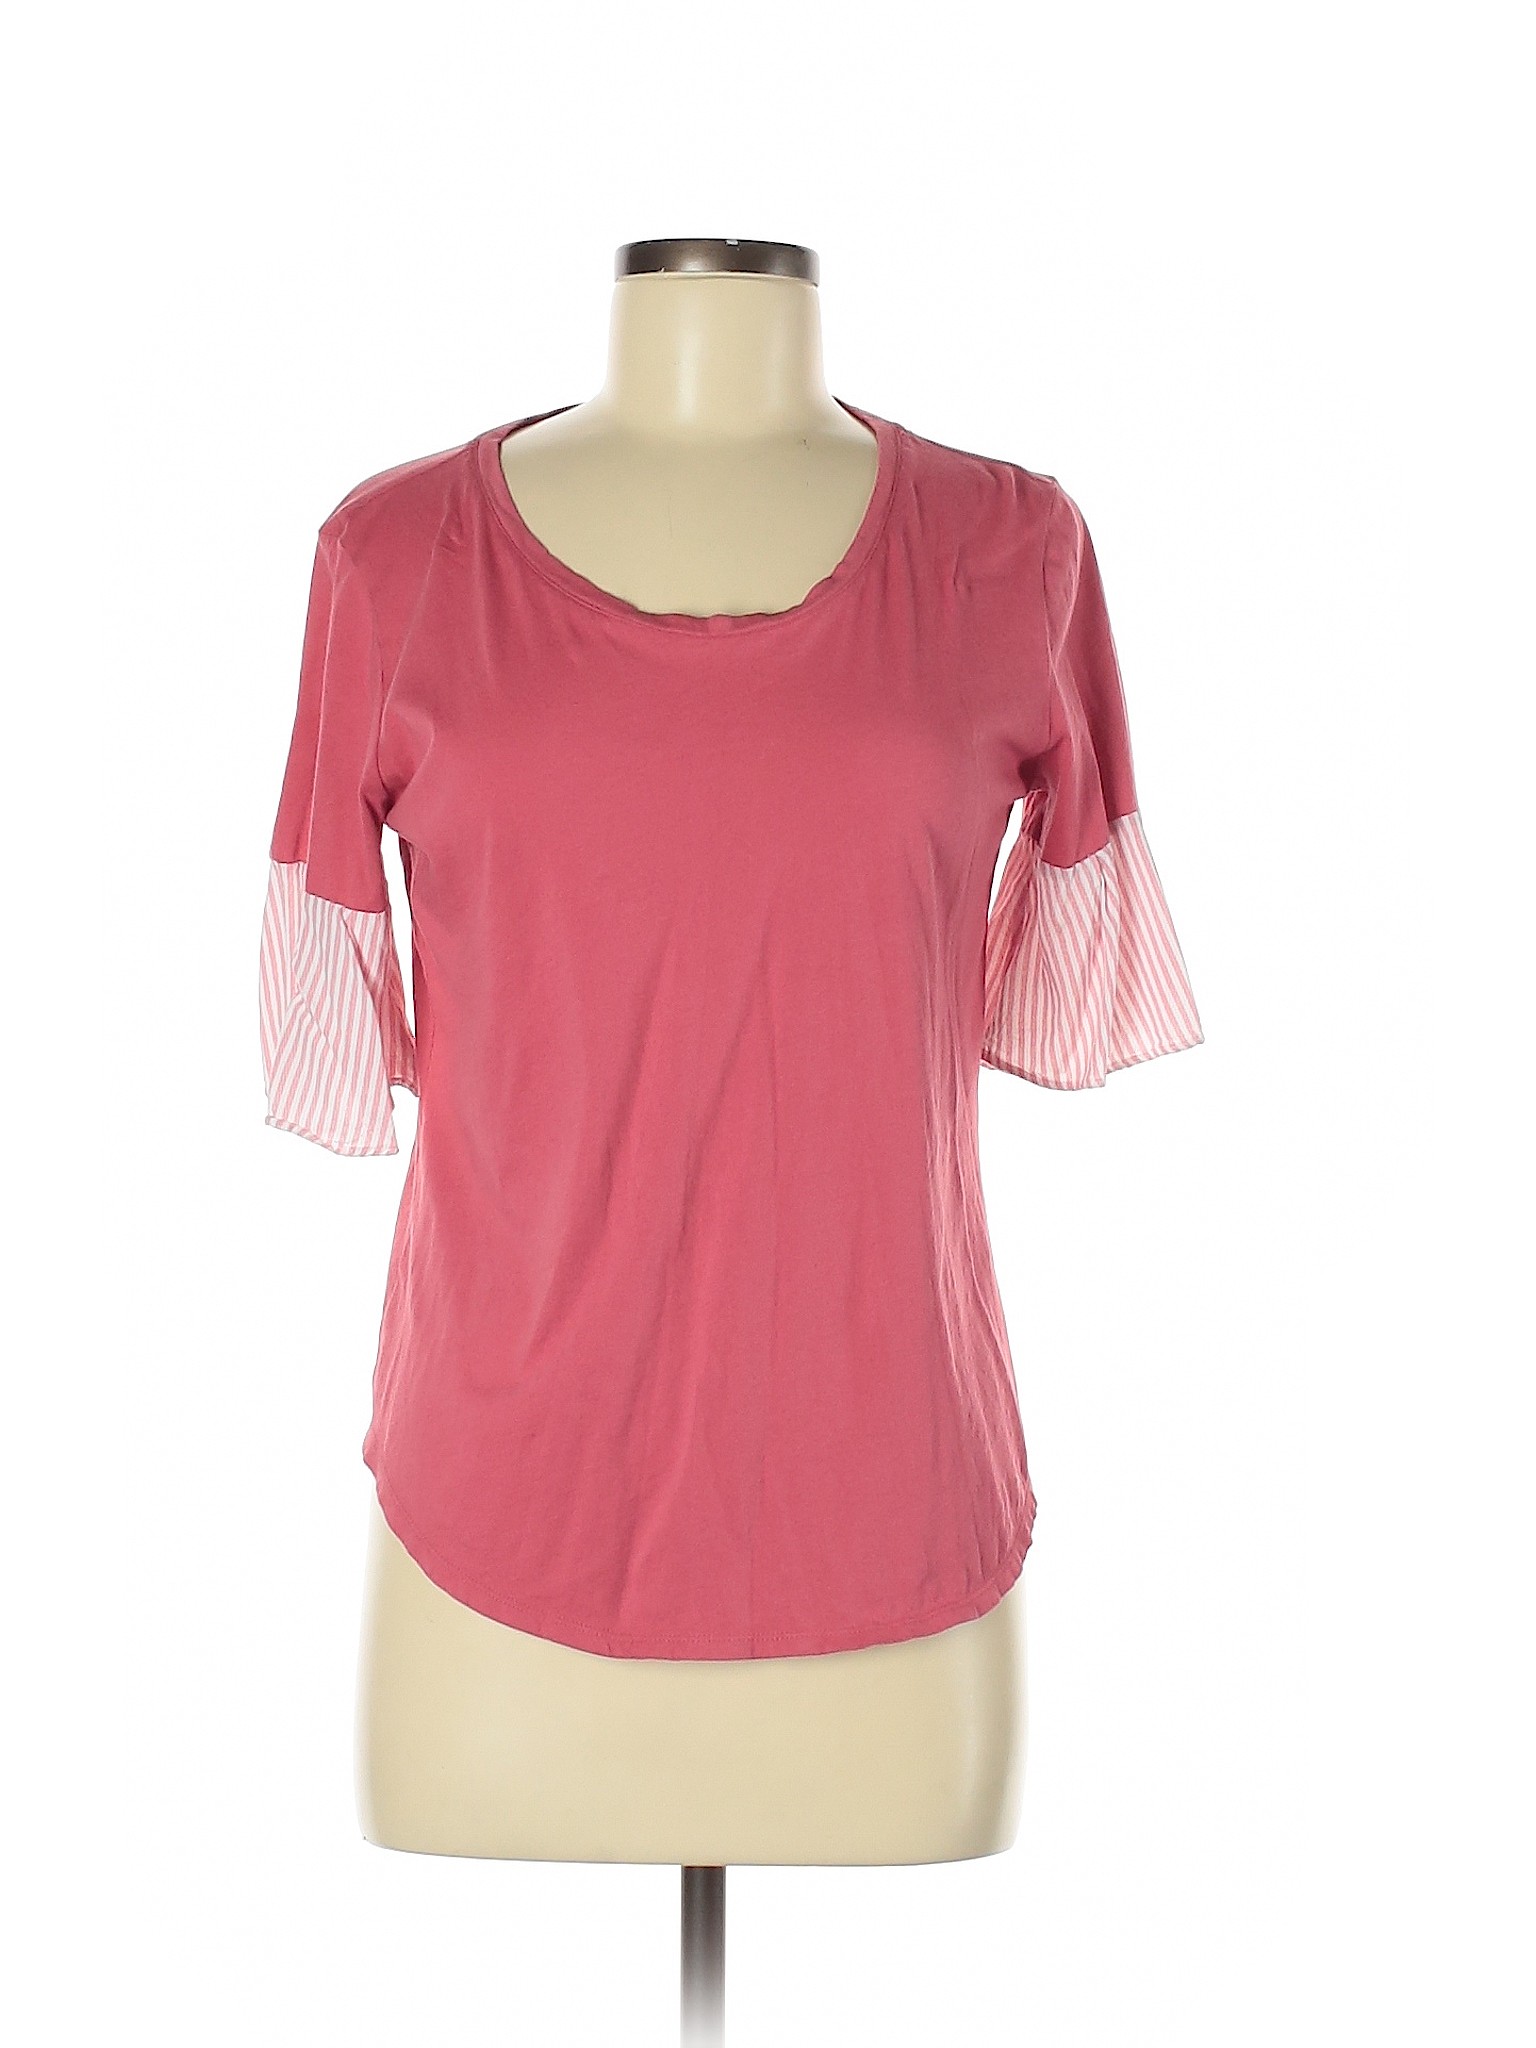 Soho JEANS NEW YORK & COMPANY Women Pink Short Sleeve T-Shirt XS | eBay